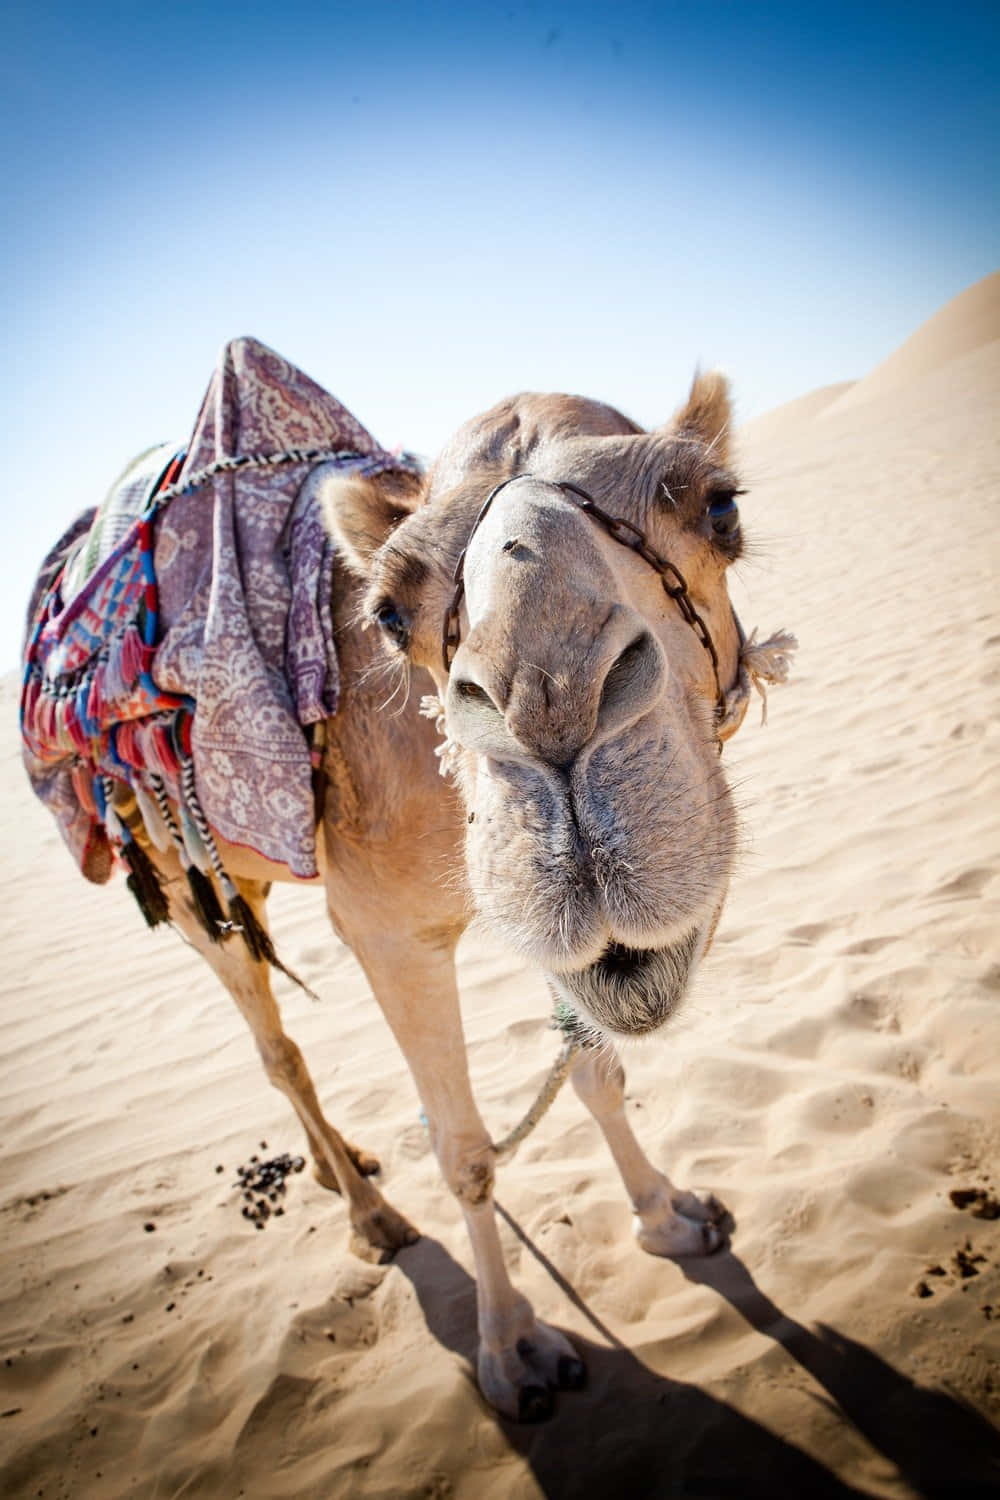 A Wondrous Site – A Camel Gaze at a Mesmerizing Landscape